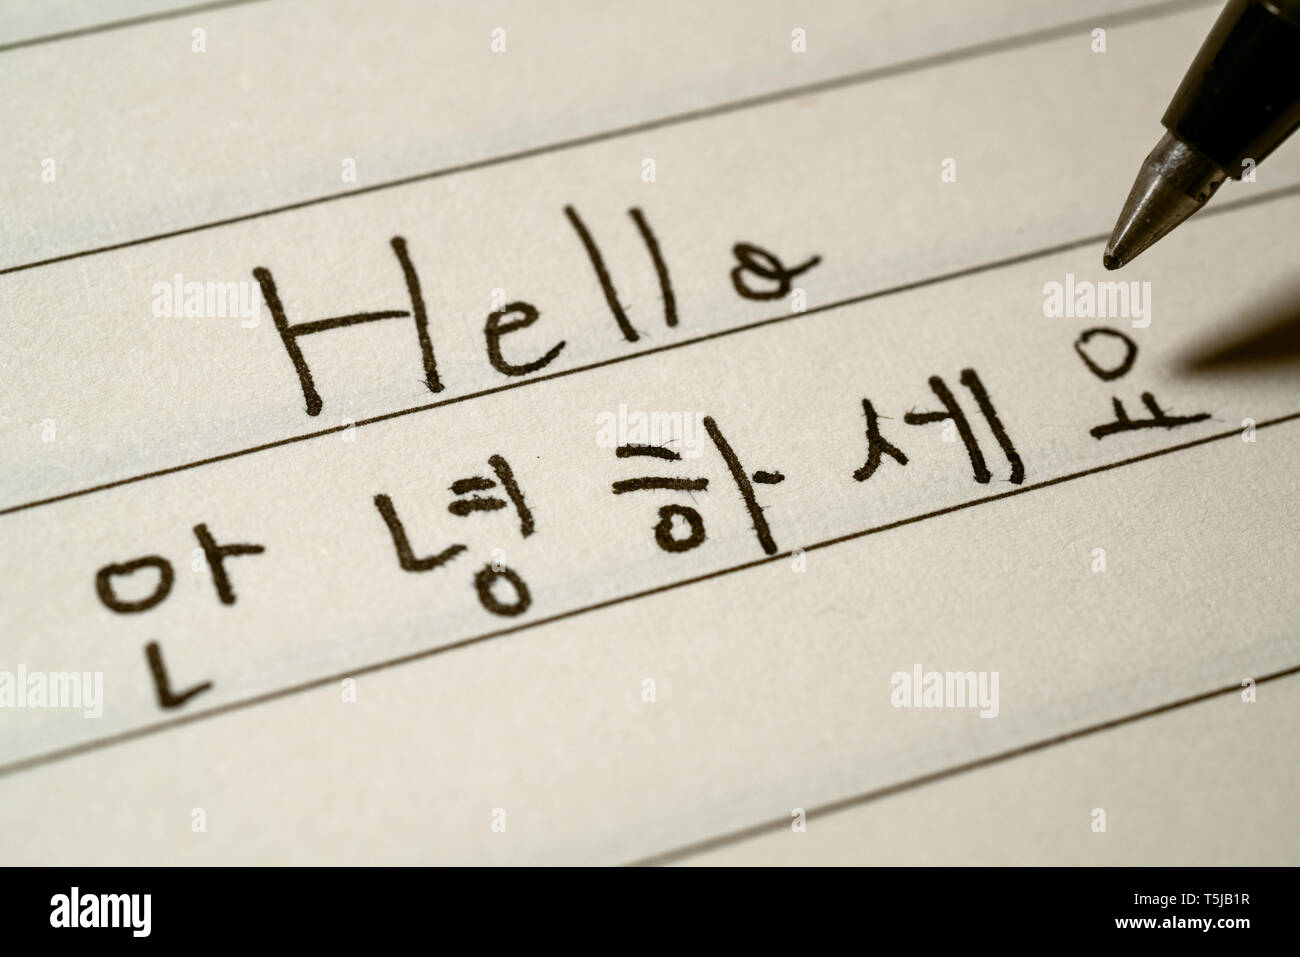 Beginner Korean language learner writing Hello word in Korean characters on a notebook macro shot Stock Photo